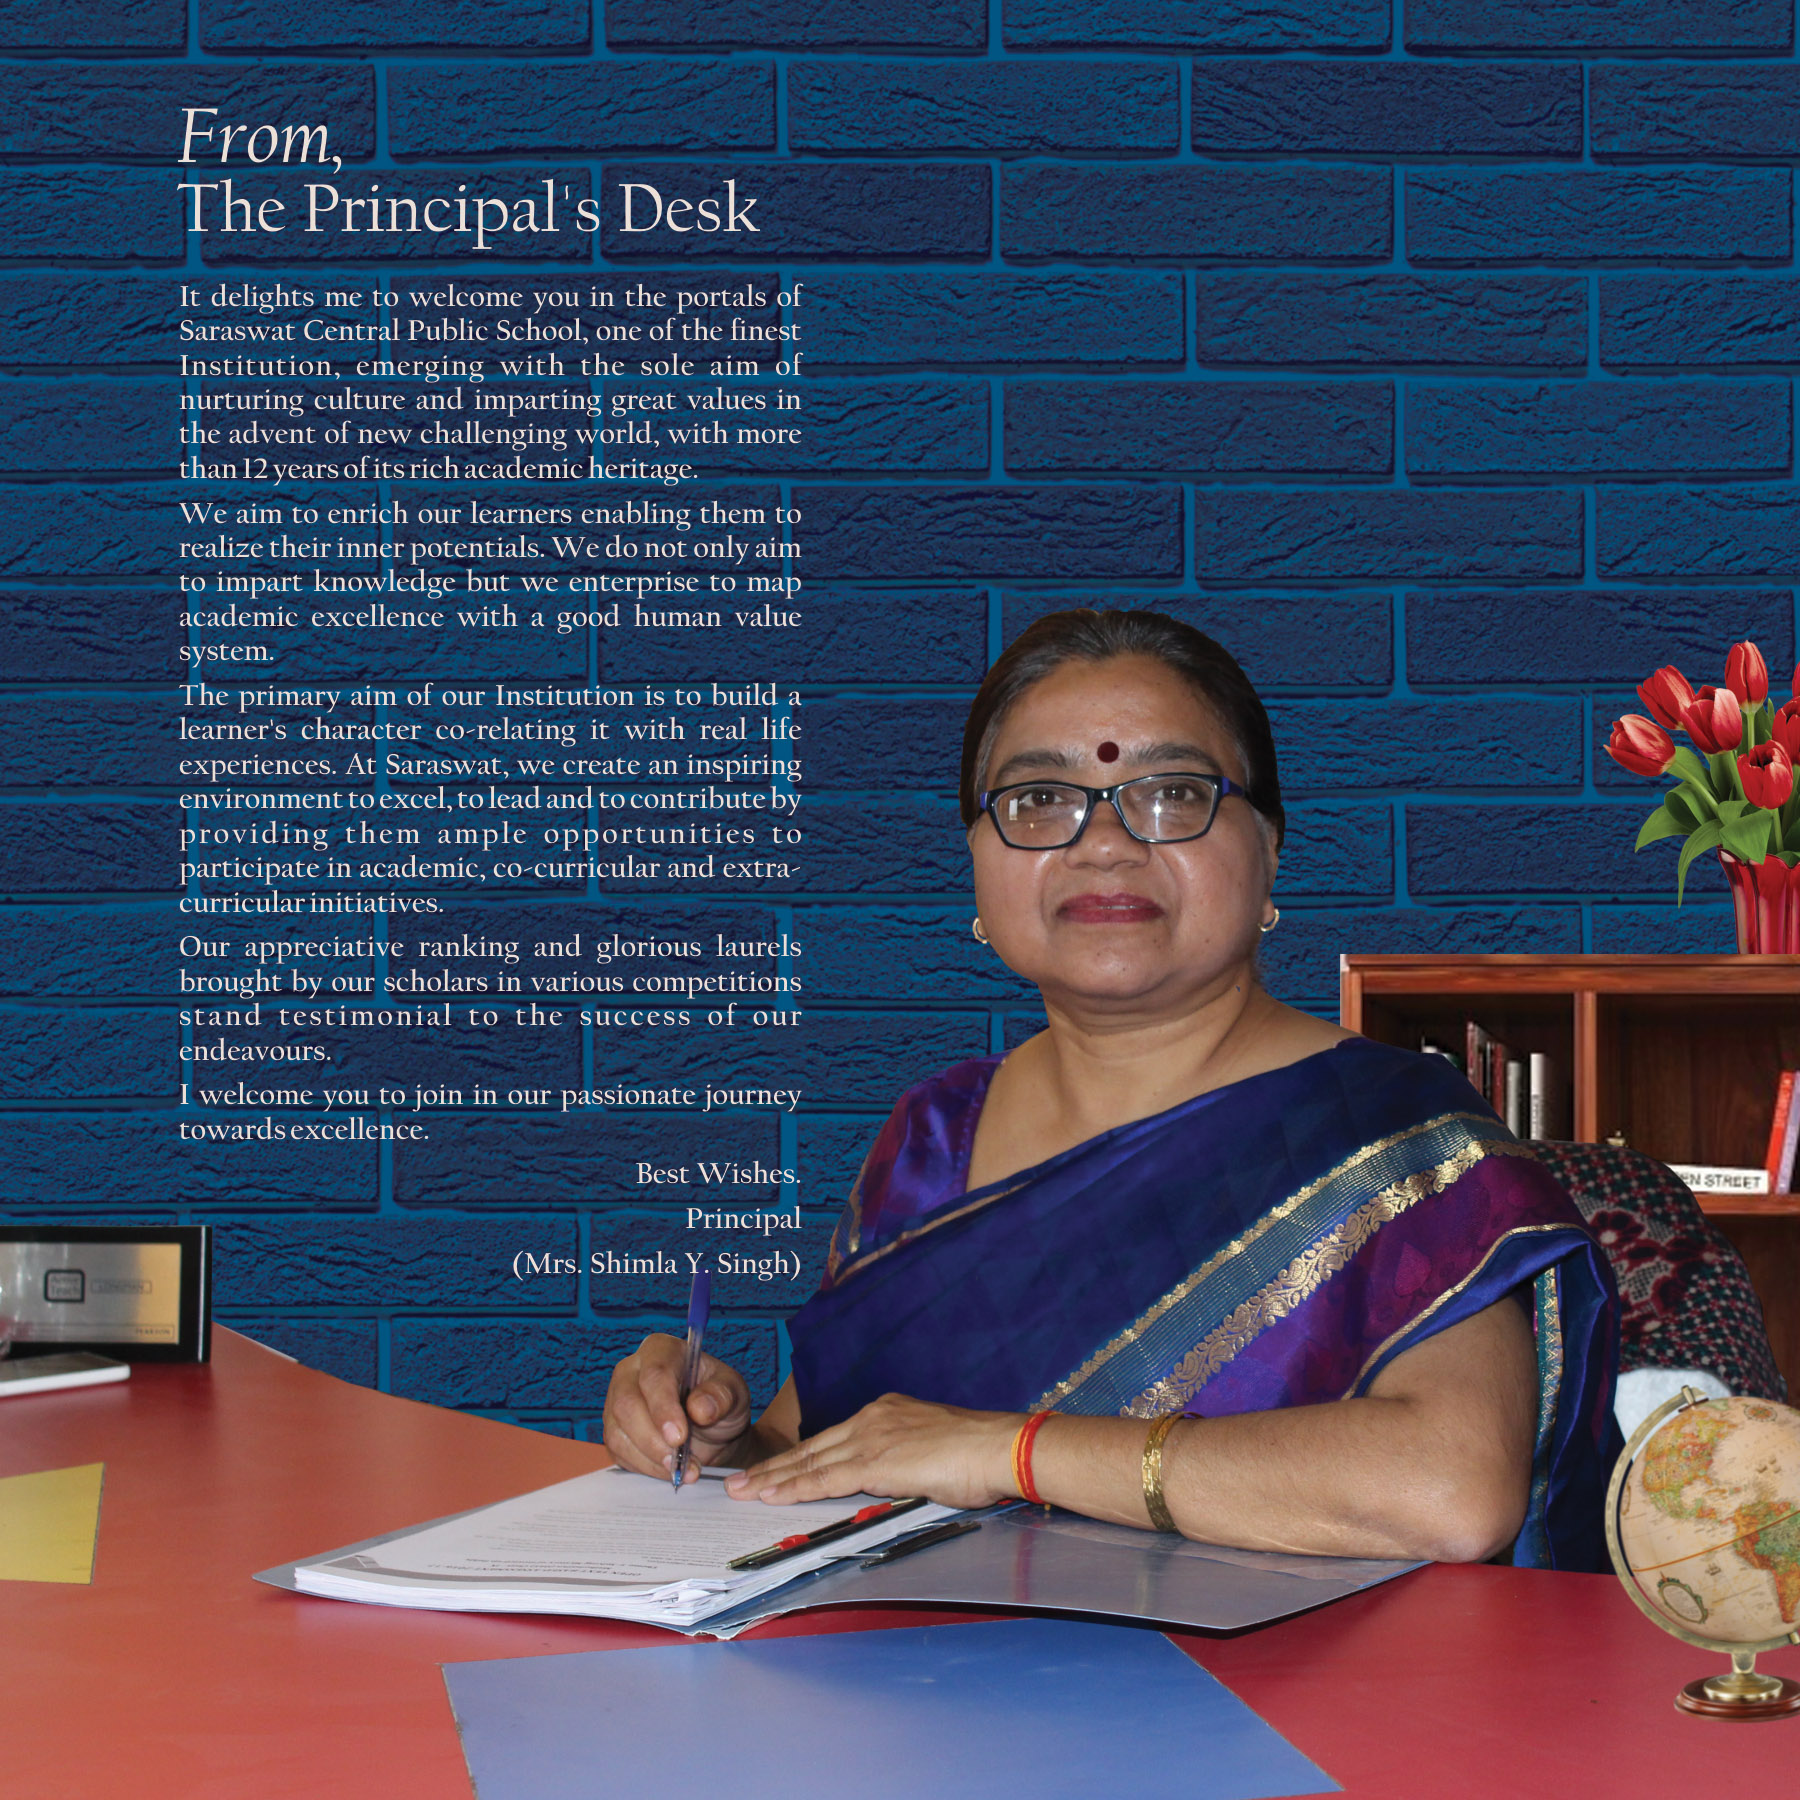 Principal's Desk